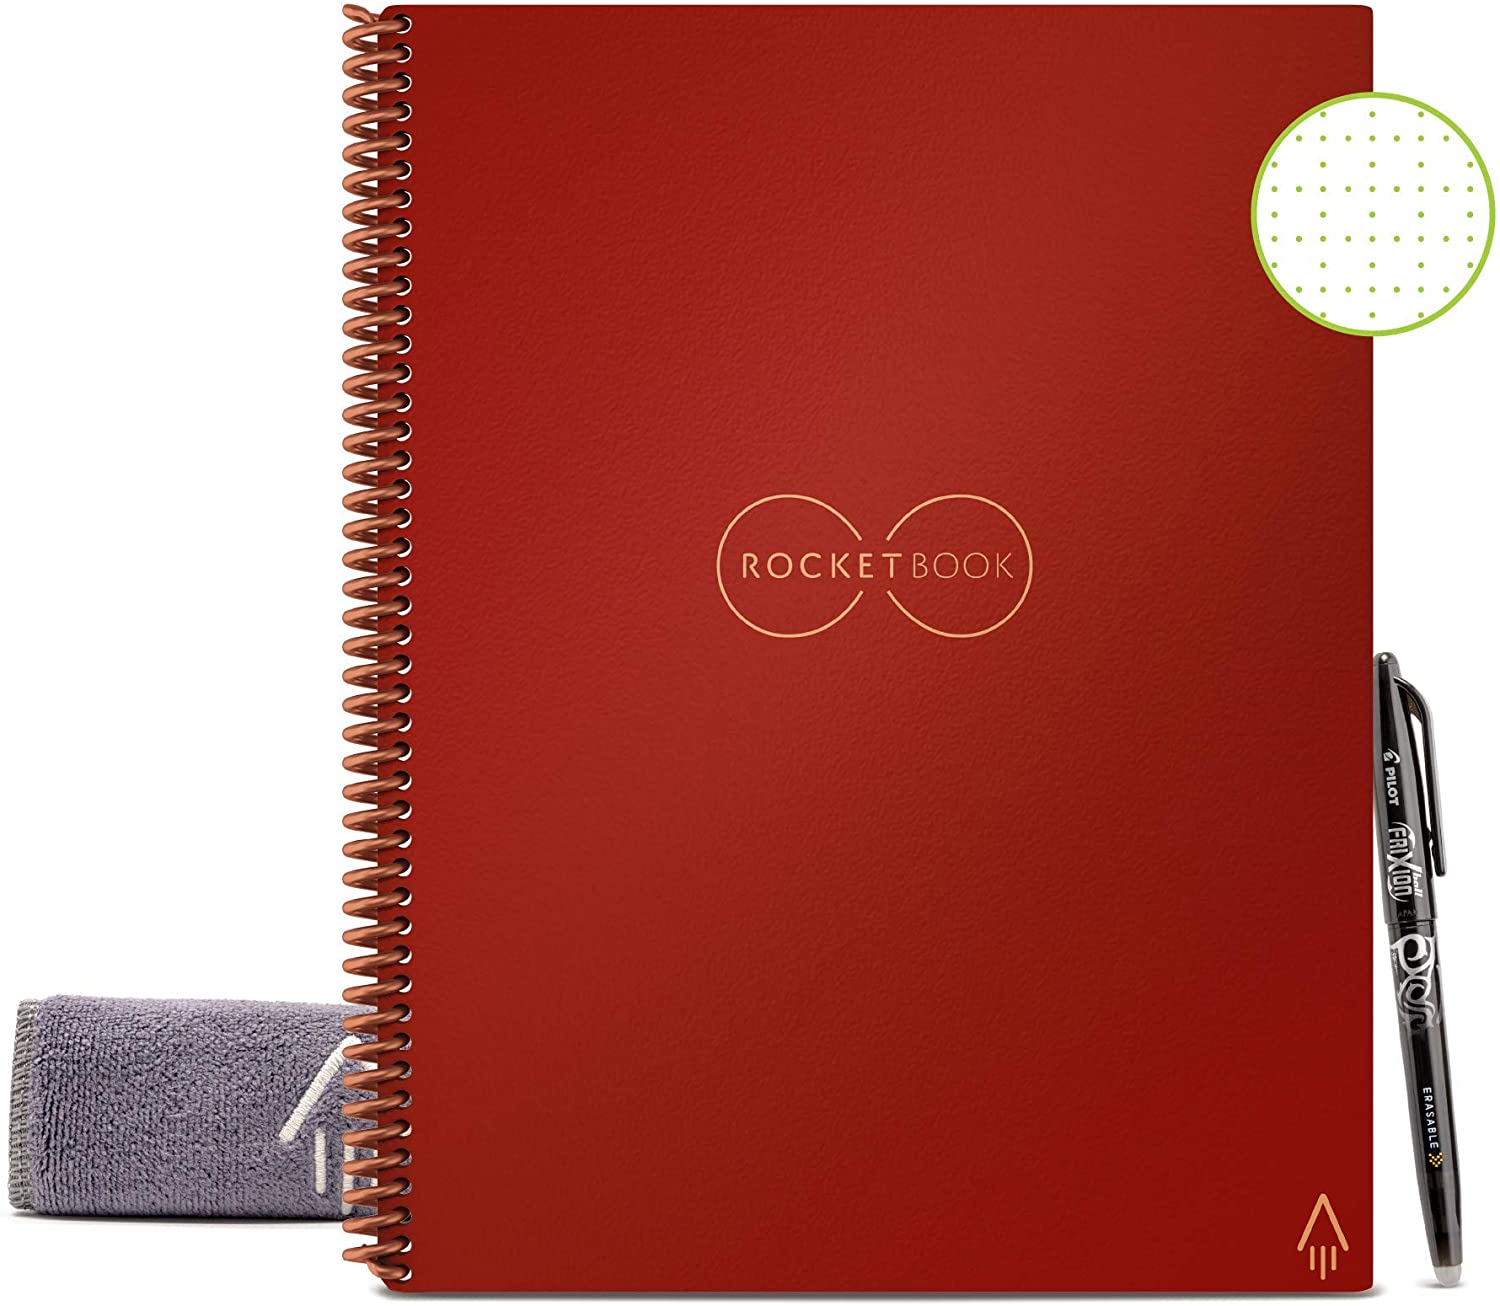 Rocketbook EVR-L-K-CME Everlast Smart Reusable Notebook with Pen and Microfiber Cloth, Letter Size, Scarlet Red